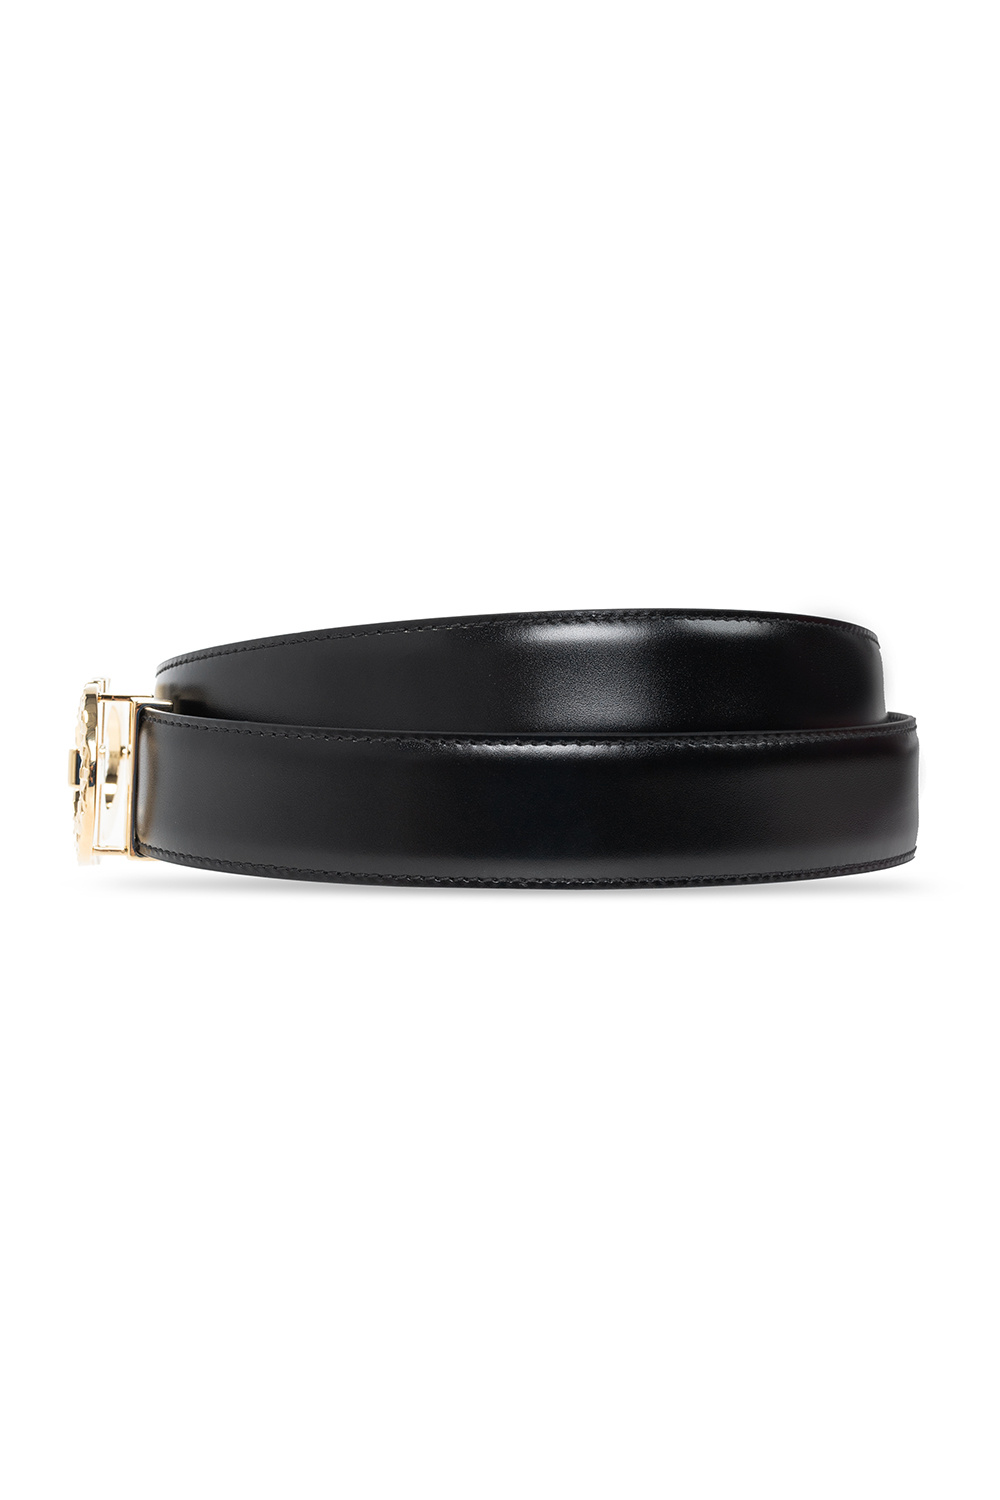 Salvatore Ferragamo Reversible leather belt